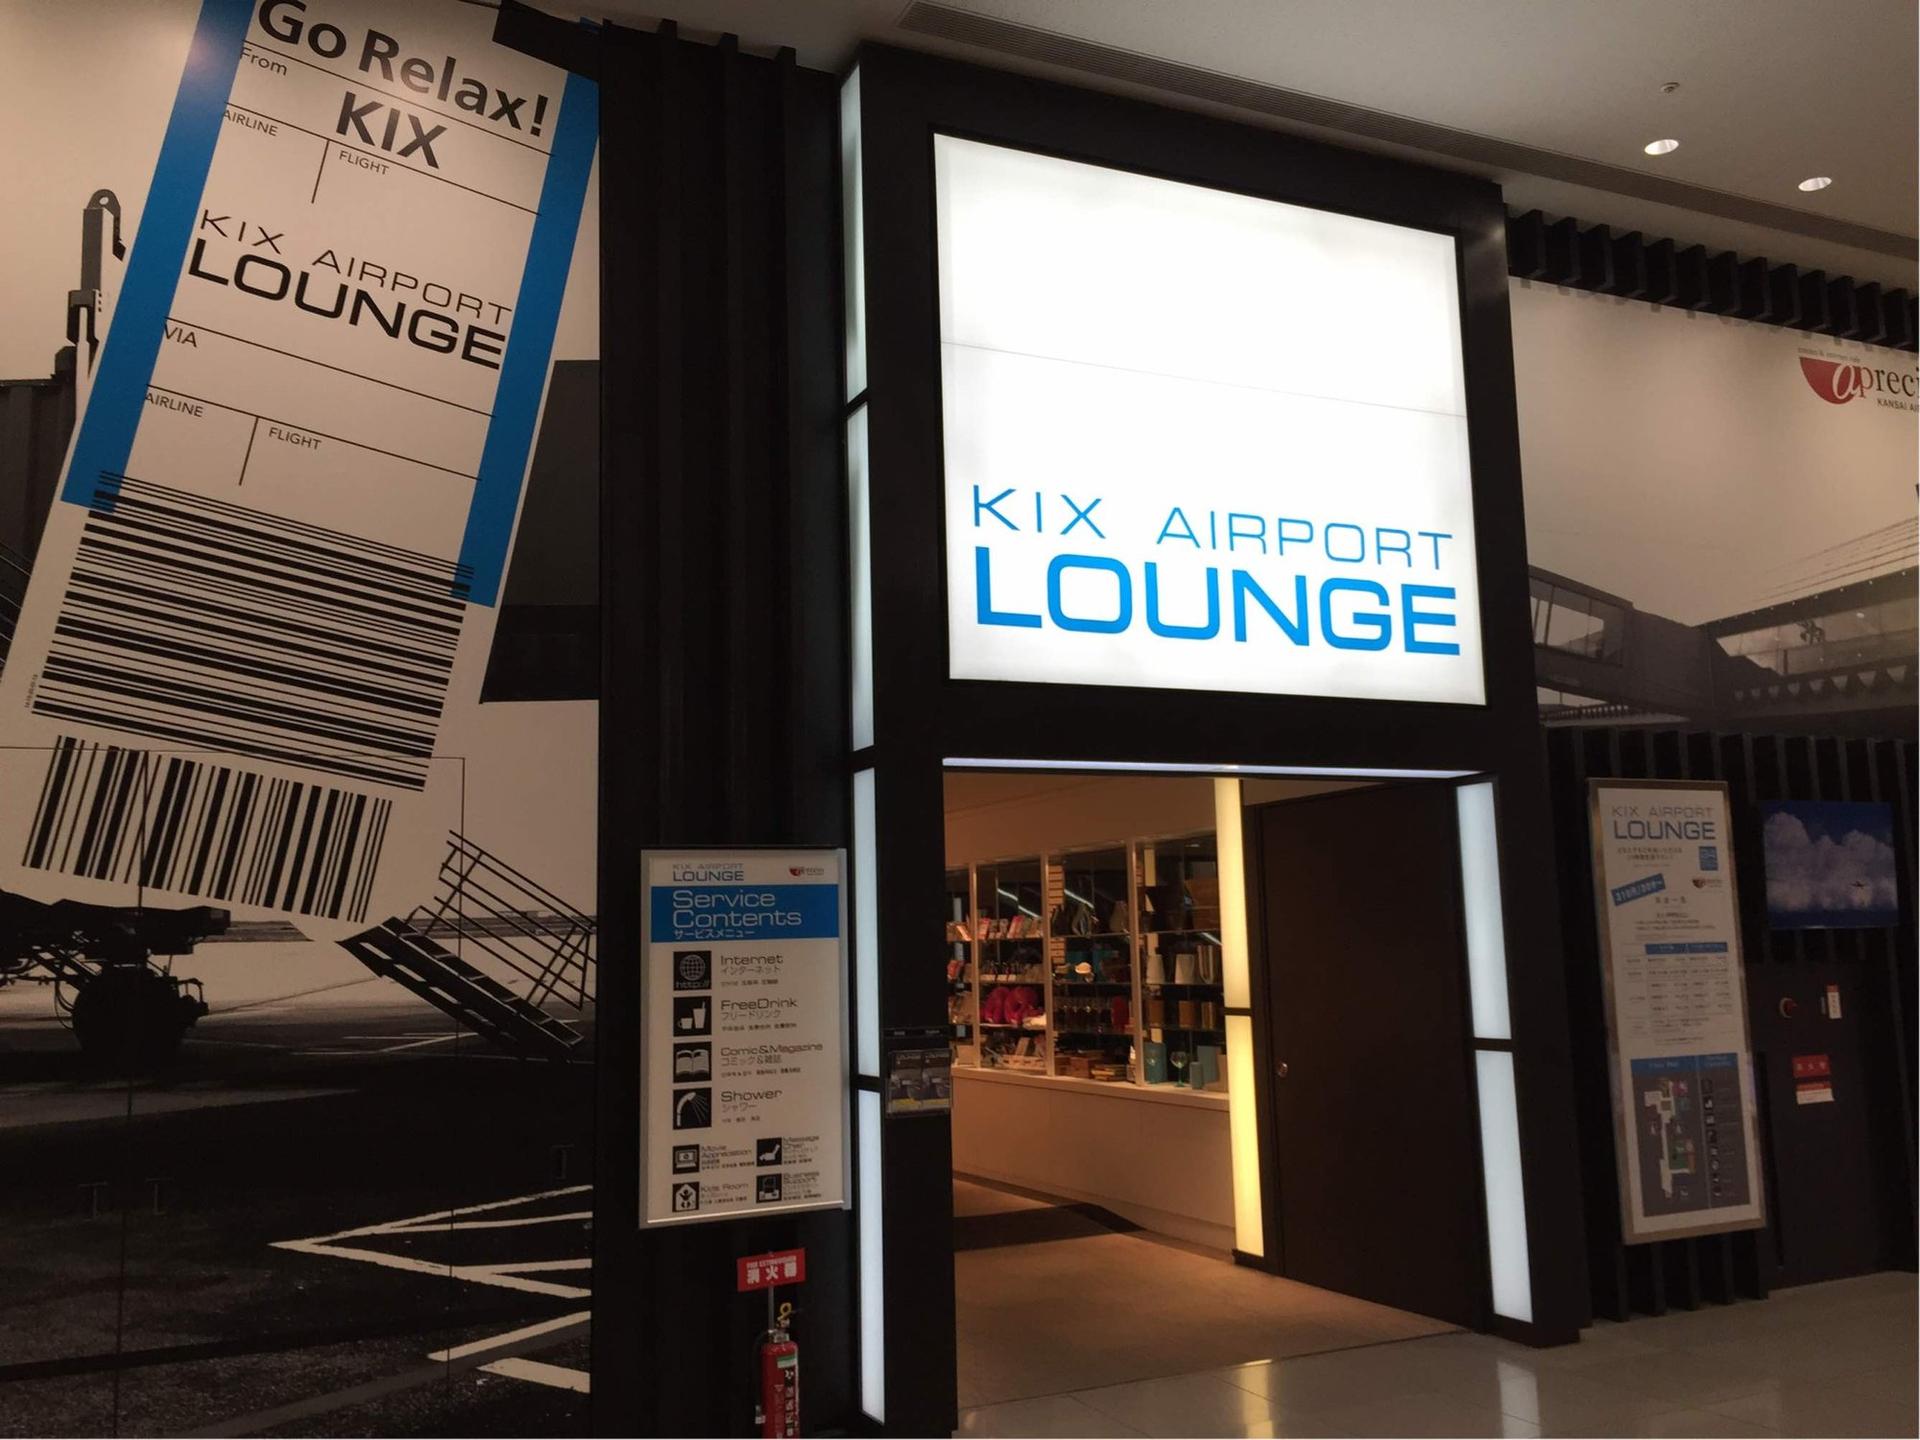 KIX Airport Lounge image 4 of 32